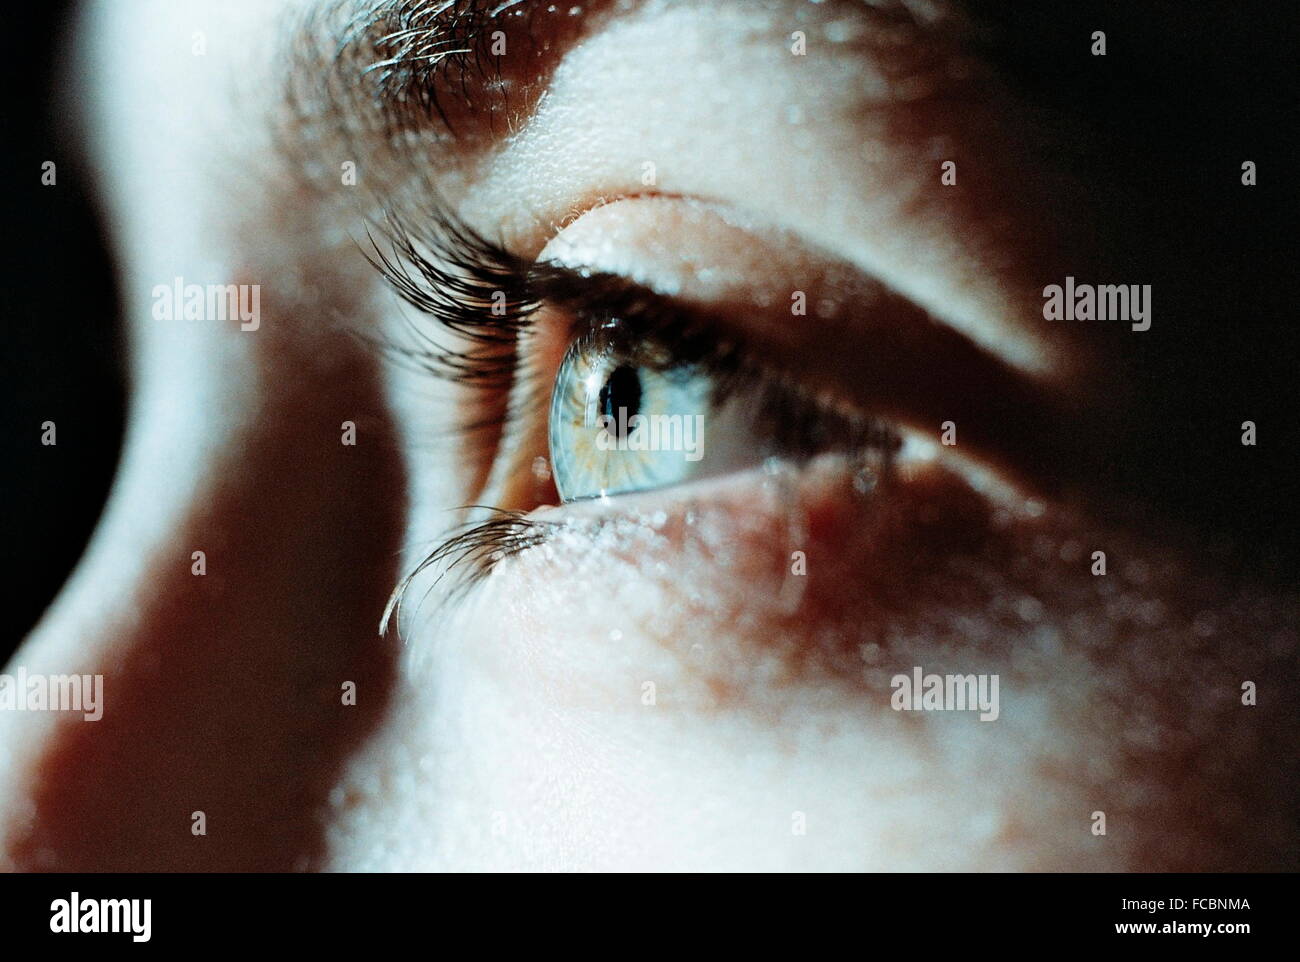 AJAXNETPHOTO. CLOSE-UP. - L'occhio umano. Foto:JONATHAN EASTLAND/AJAX REF:TC6082 1 1 Foto Stock